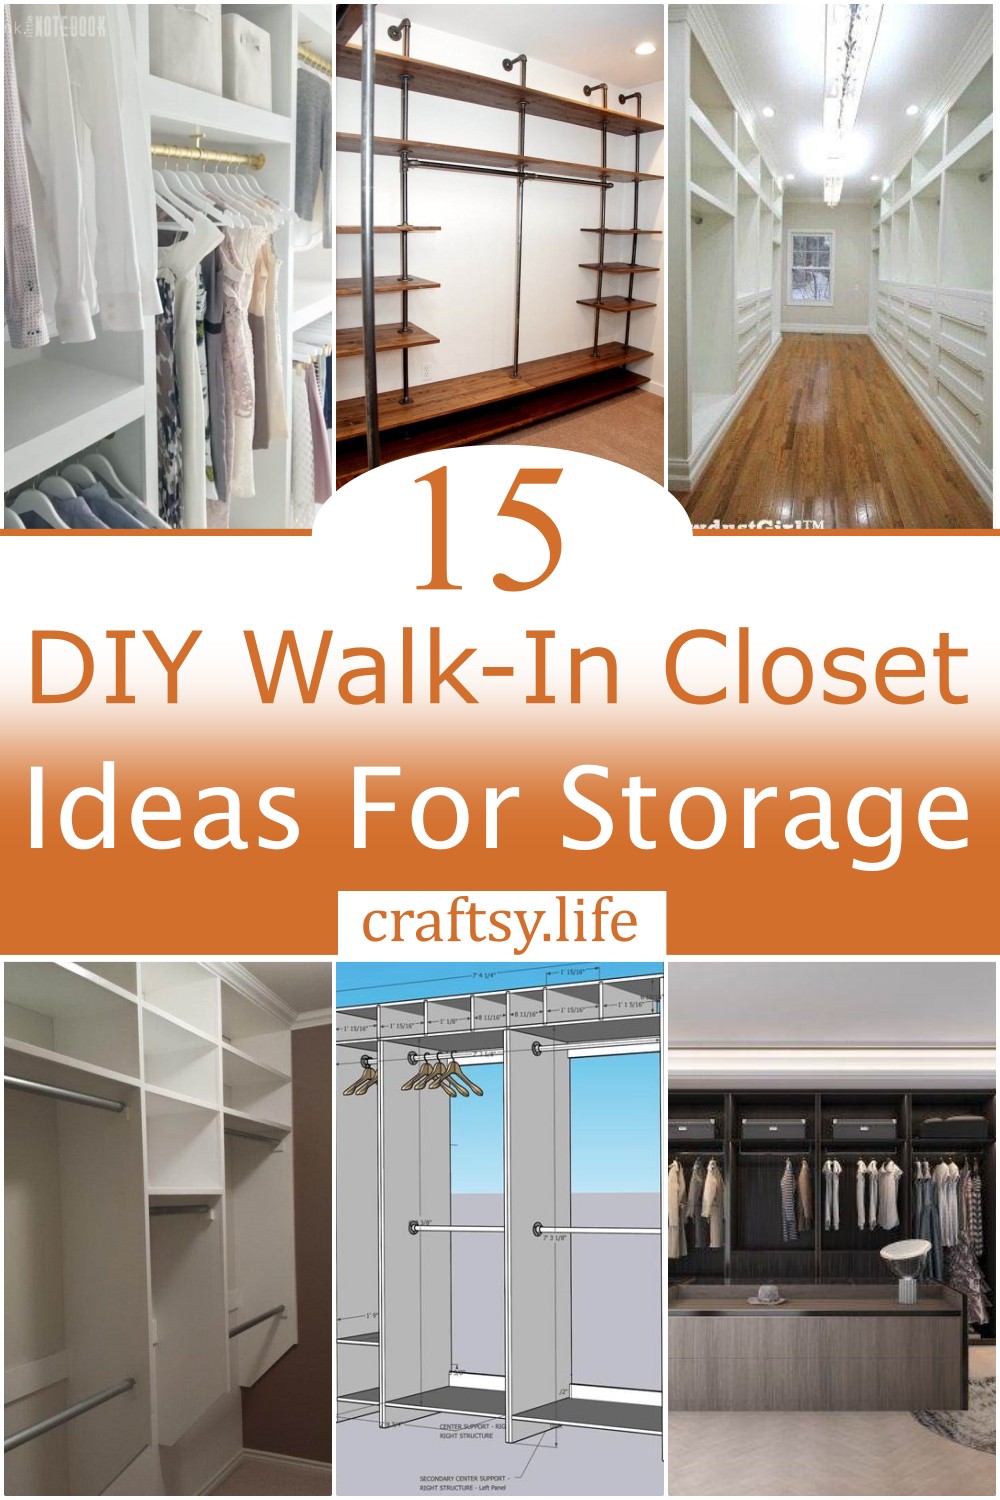 DIY Walk-In Closet Ideas